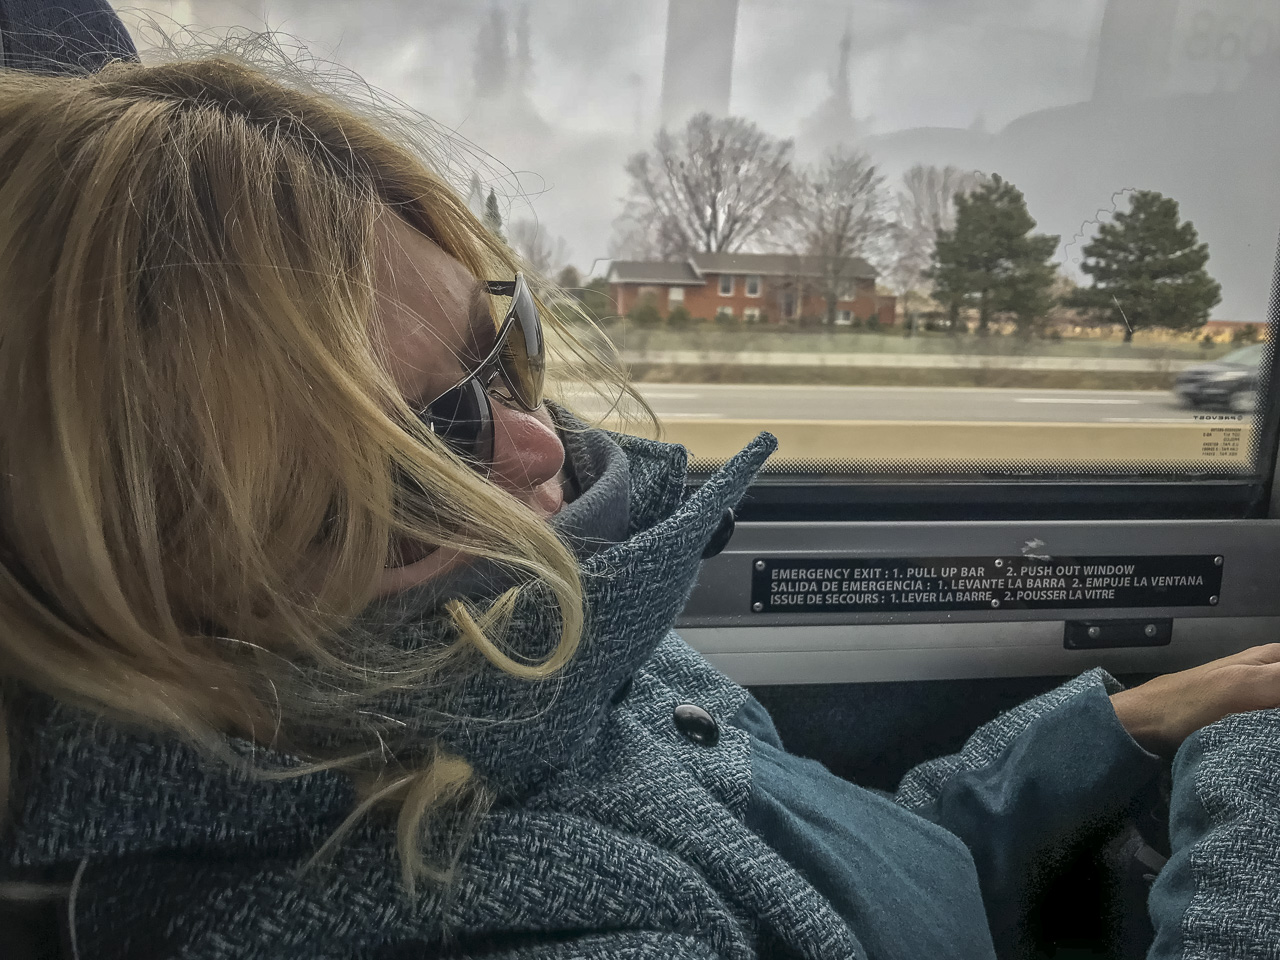  Toronto to Niagara Falls bus you can sleep on the way home